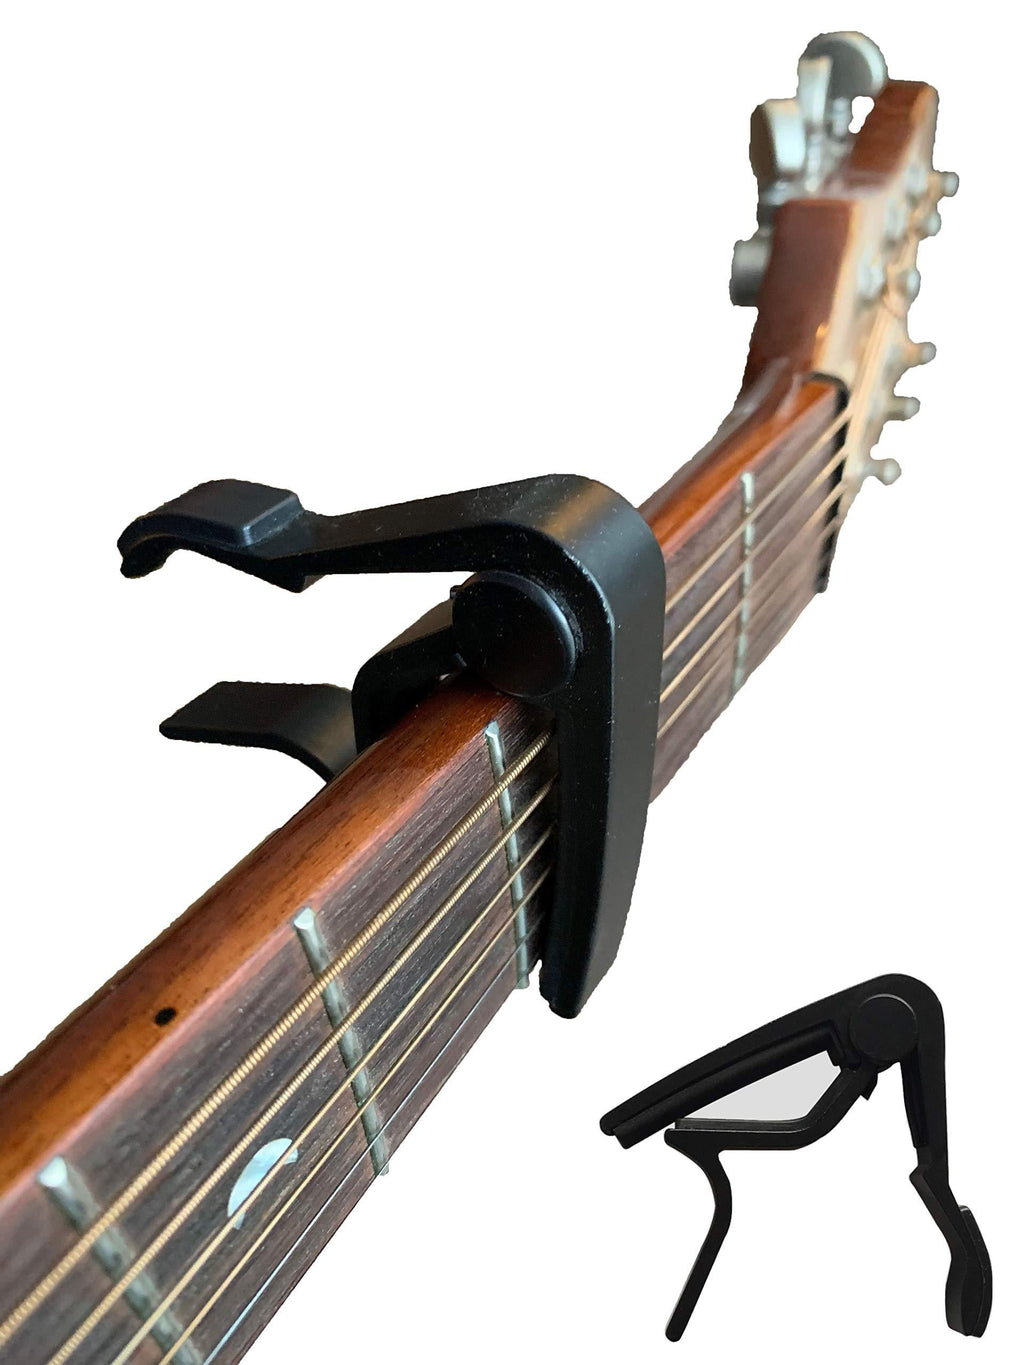 Acoustic Guitar Capo - For Electric, Ukulele, Bass, Banjo - Zero Fret Buzz Clamp with Ergonomic Design - Black Sleek Design